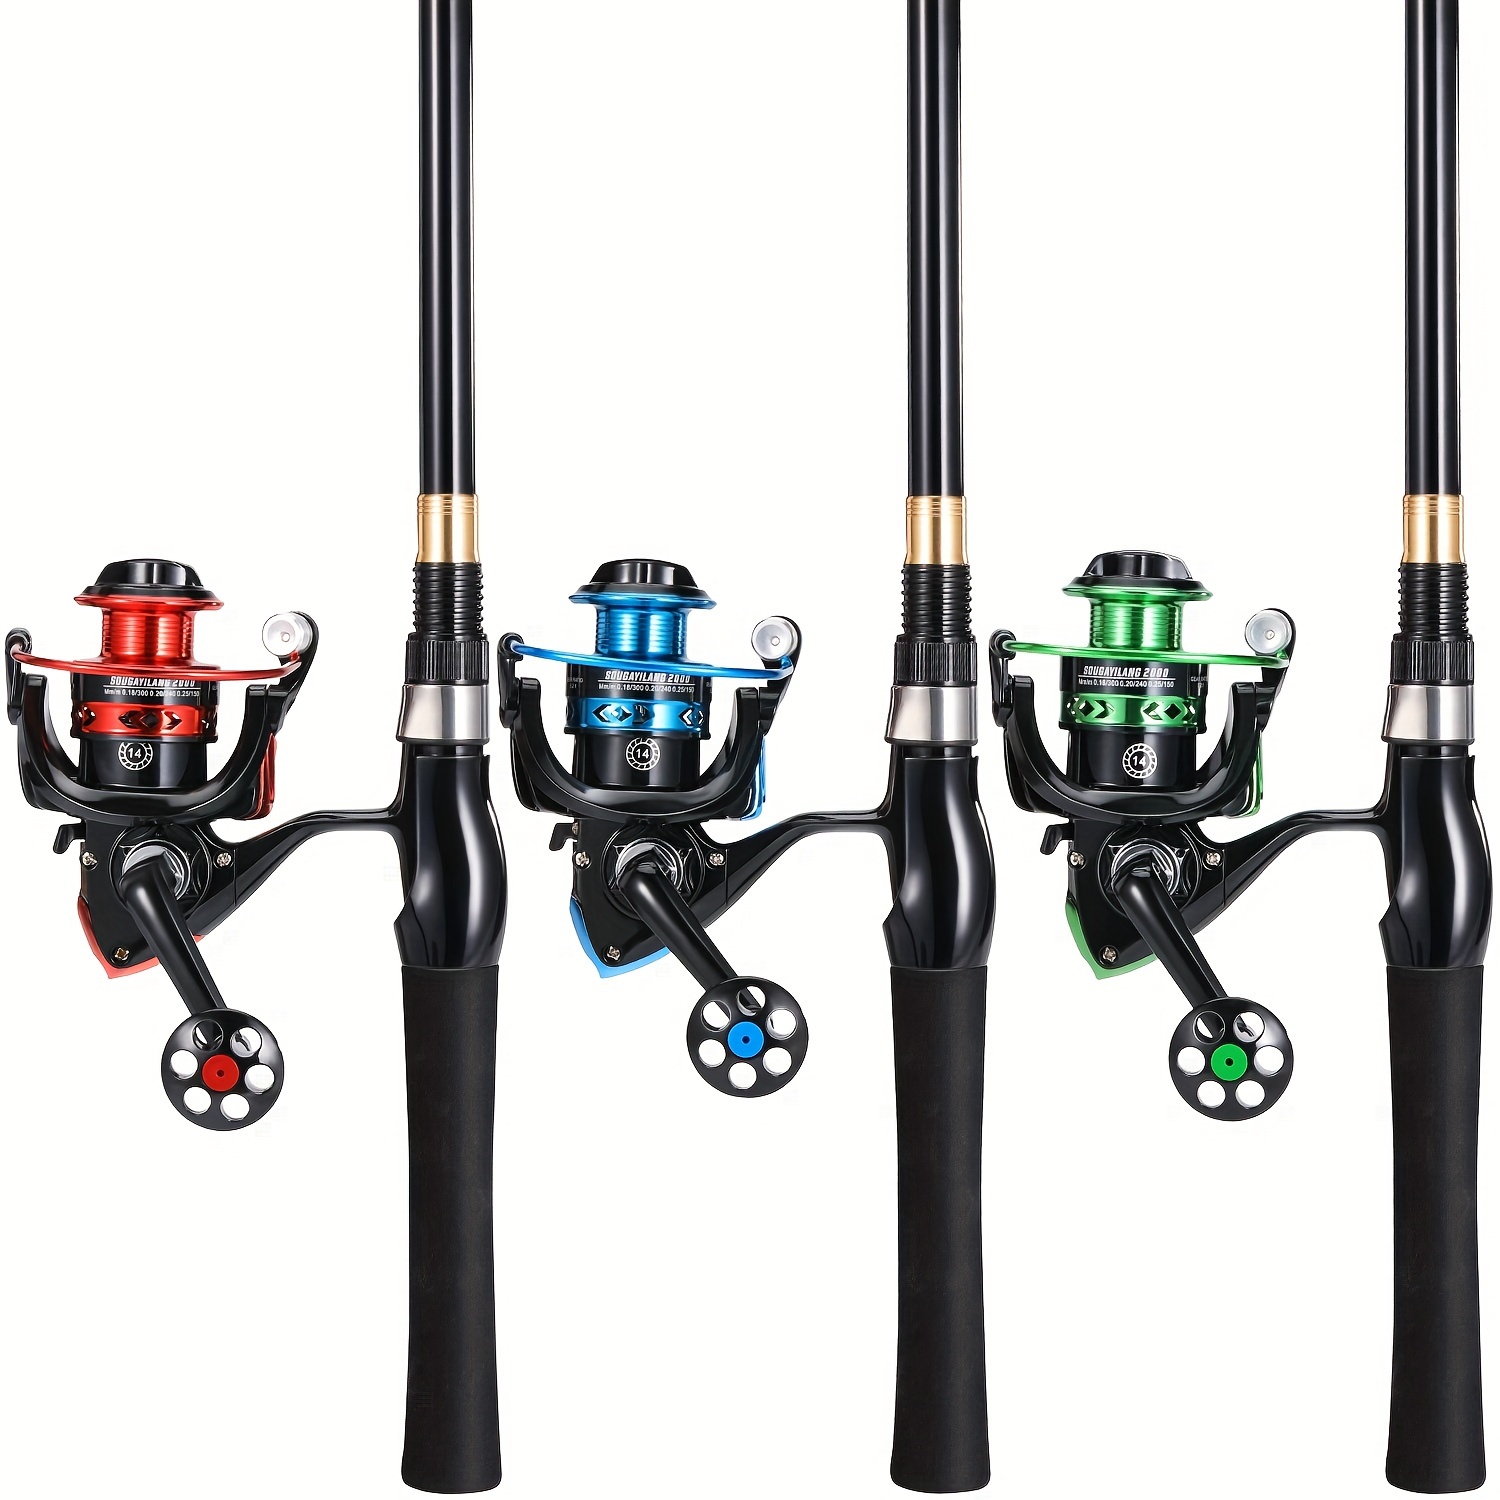 Sougayilang Telescopic Fishing Rod And Reel Combo 1.8-2.4m Fishing Pole And  5.2:1 Gear Ratio 14 Ball Bearings Spinning Fishing Reel Sets For Carp  Fishing Tackle Pesca